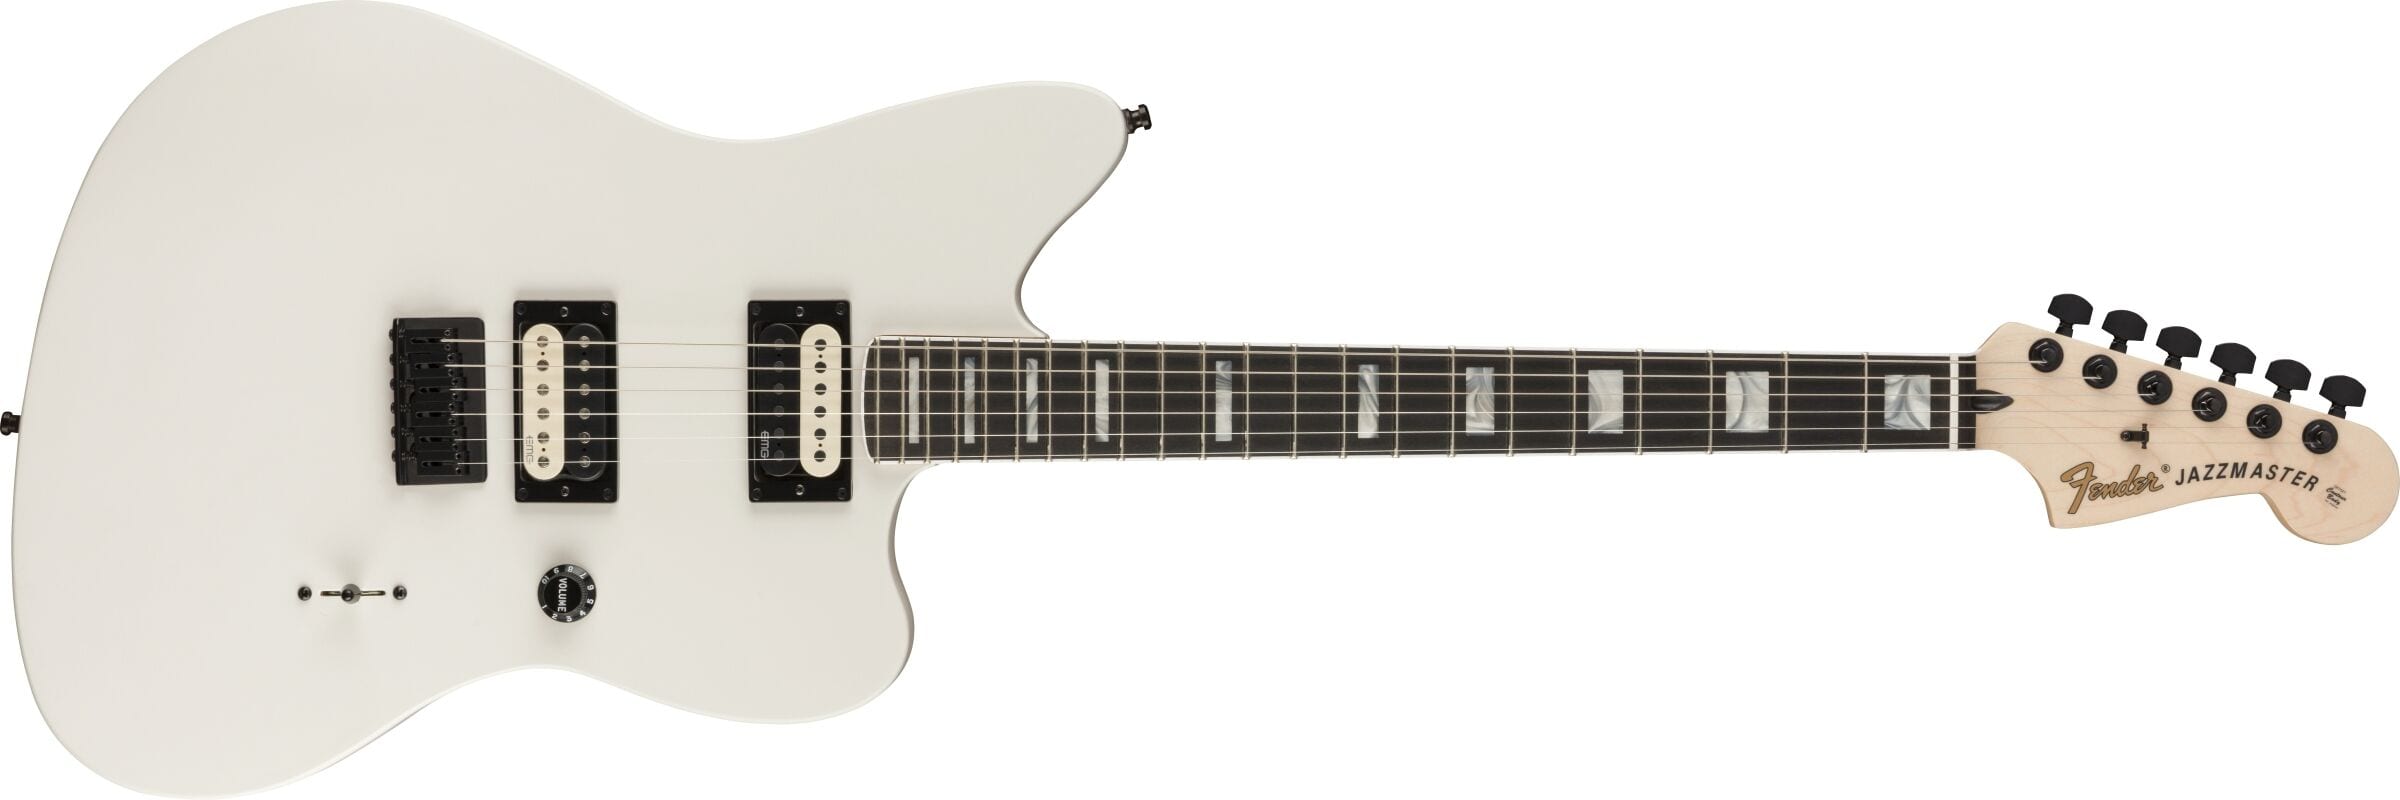 Fender Jim Root EMG loaded signature Jazzmaster